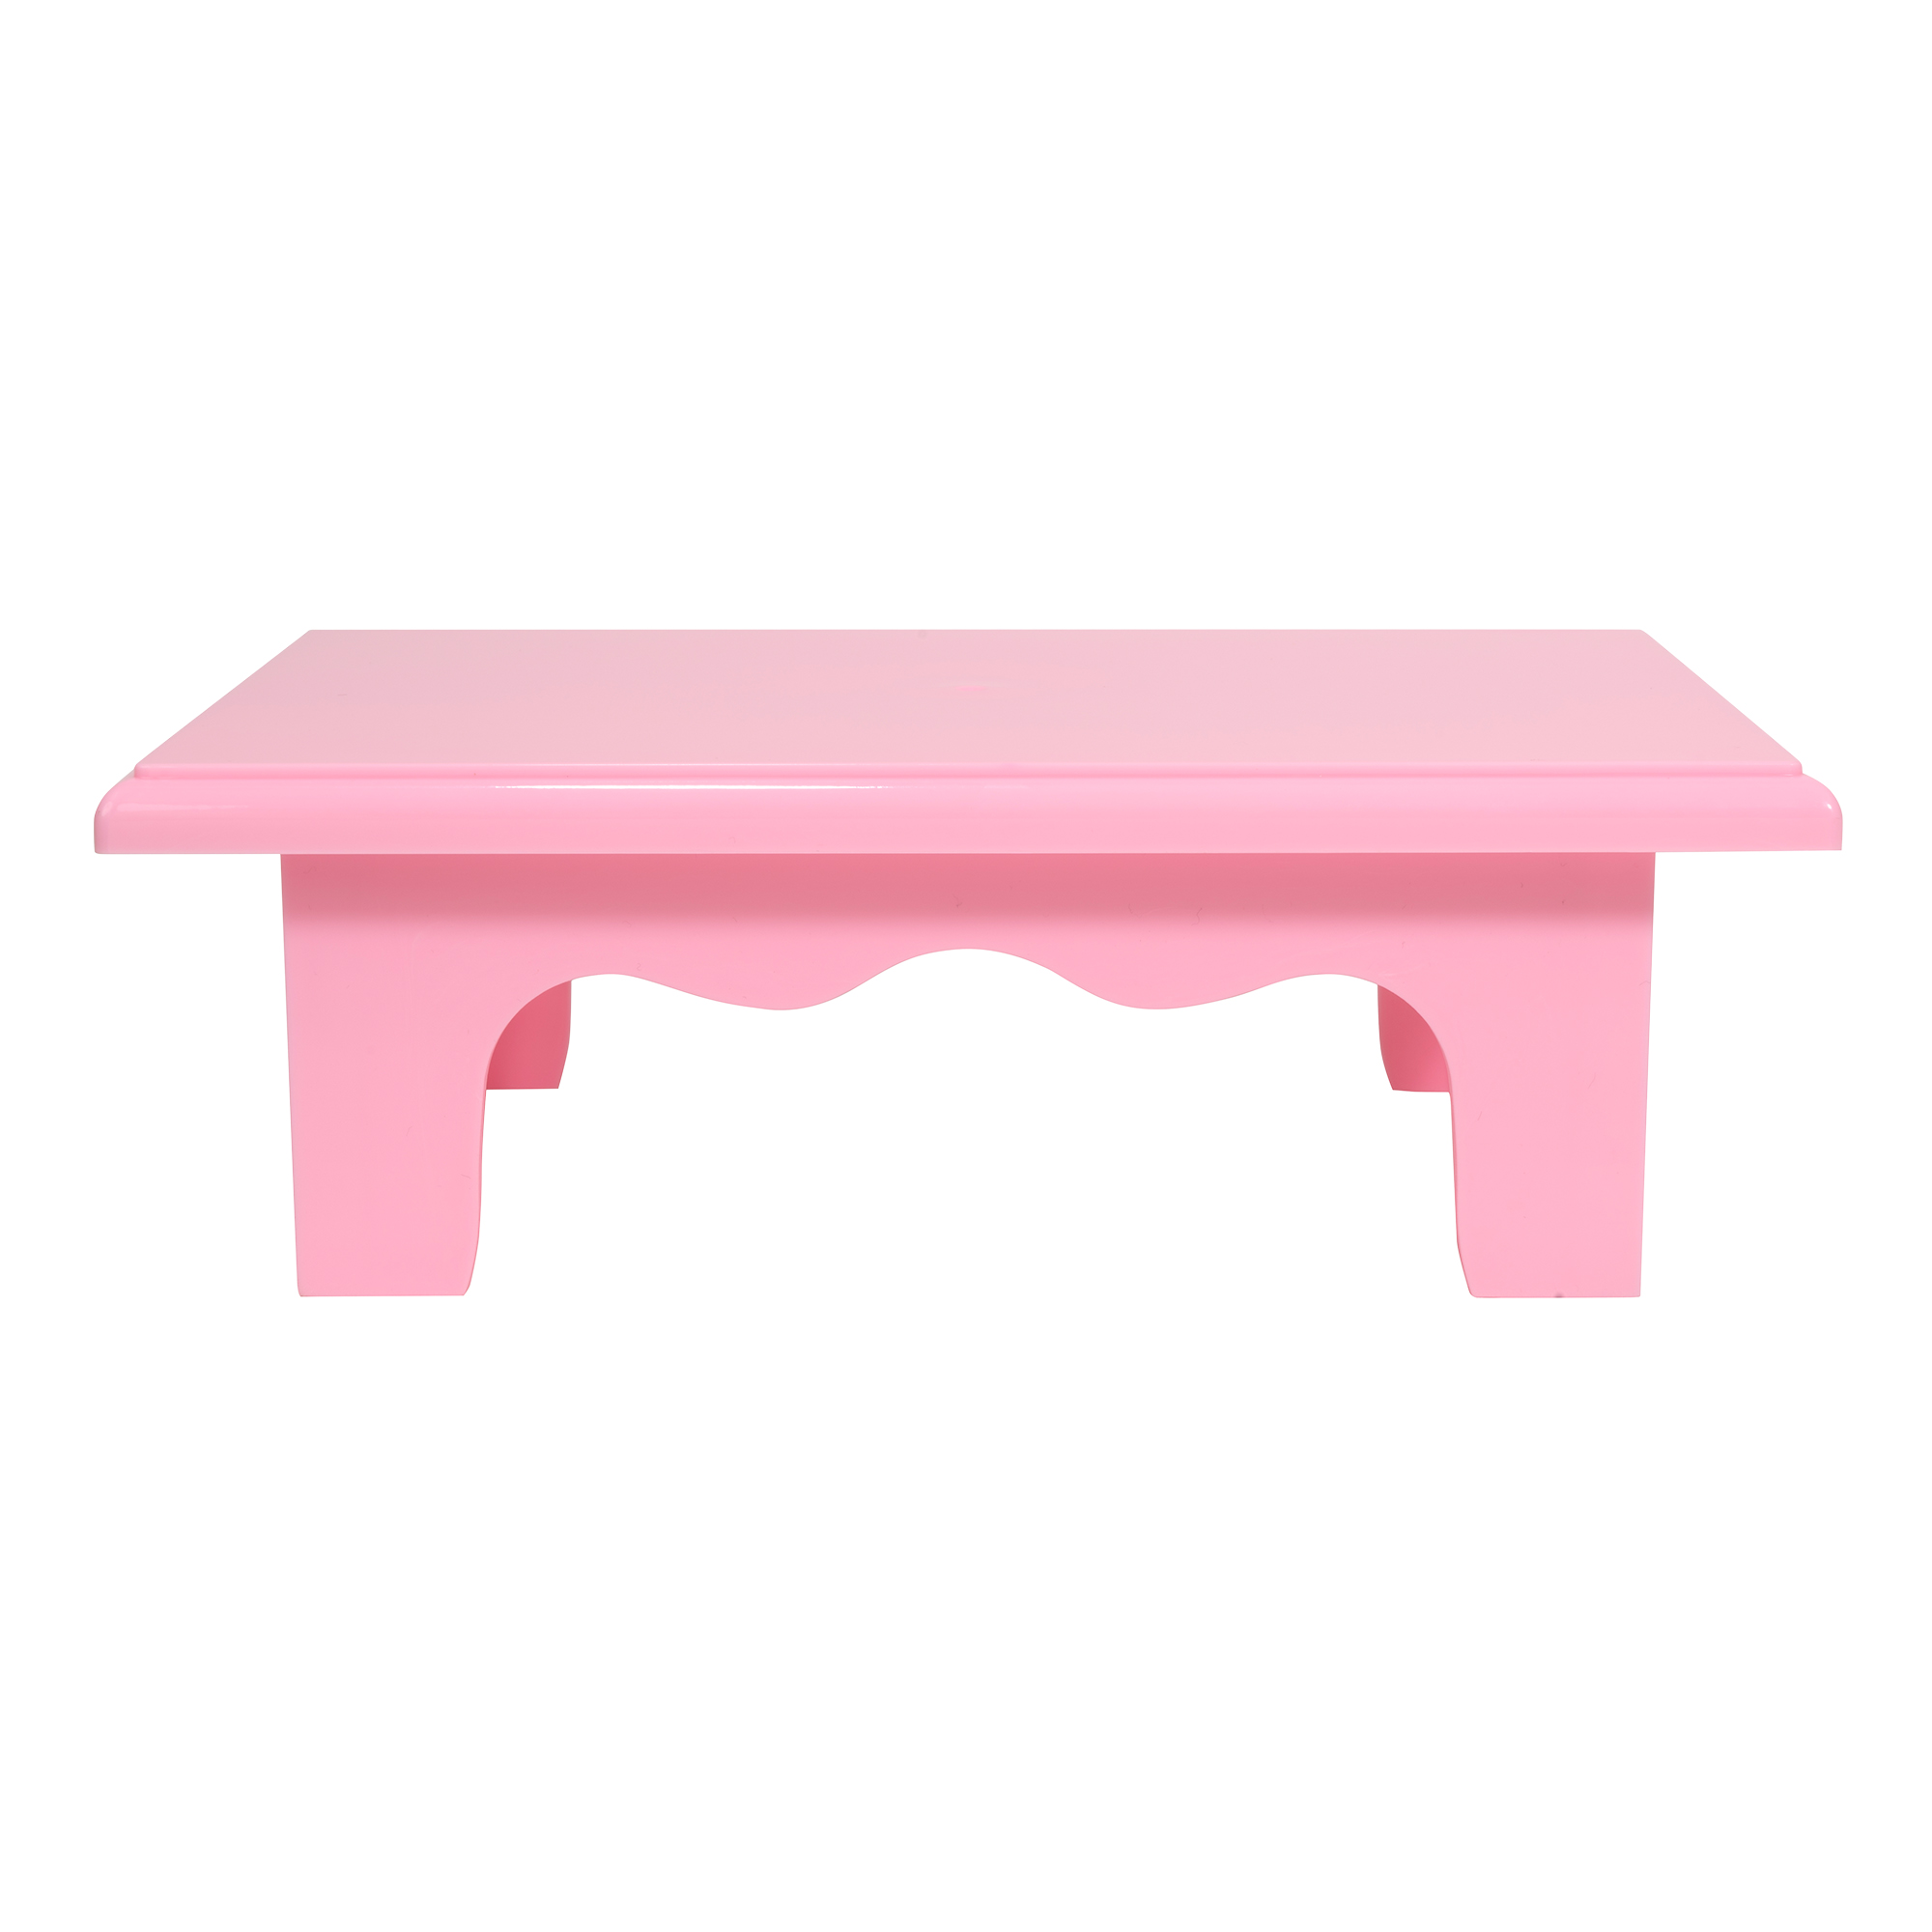 Plastic Treat Stand Riser - Pink